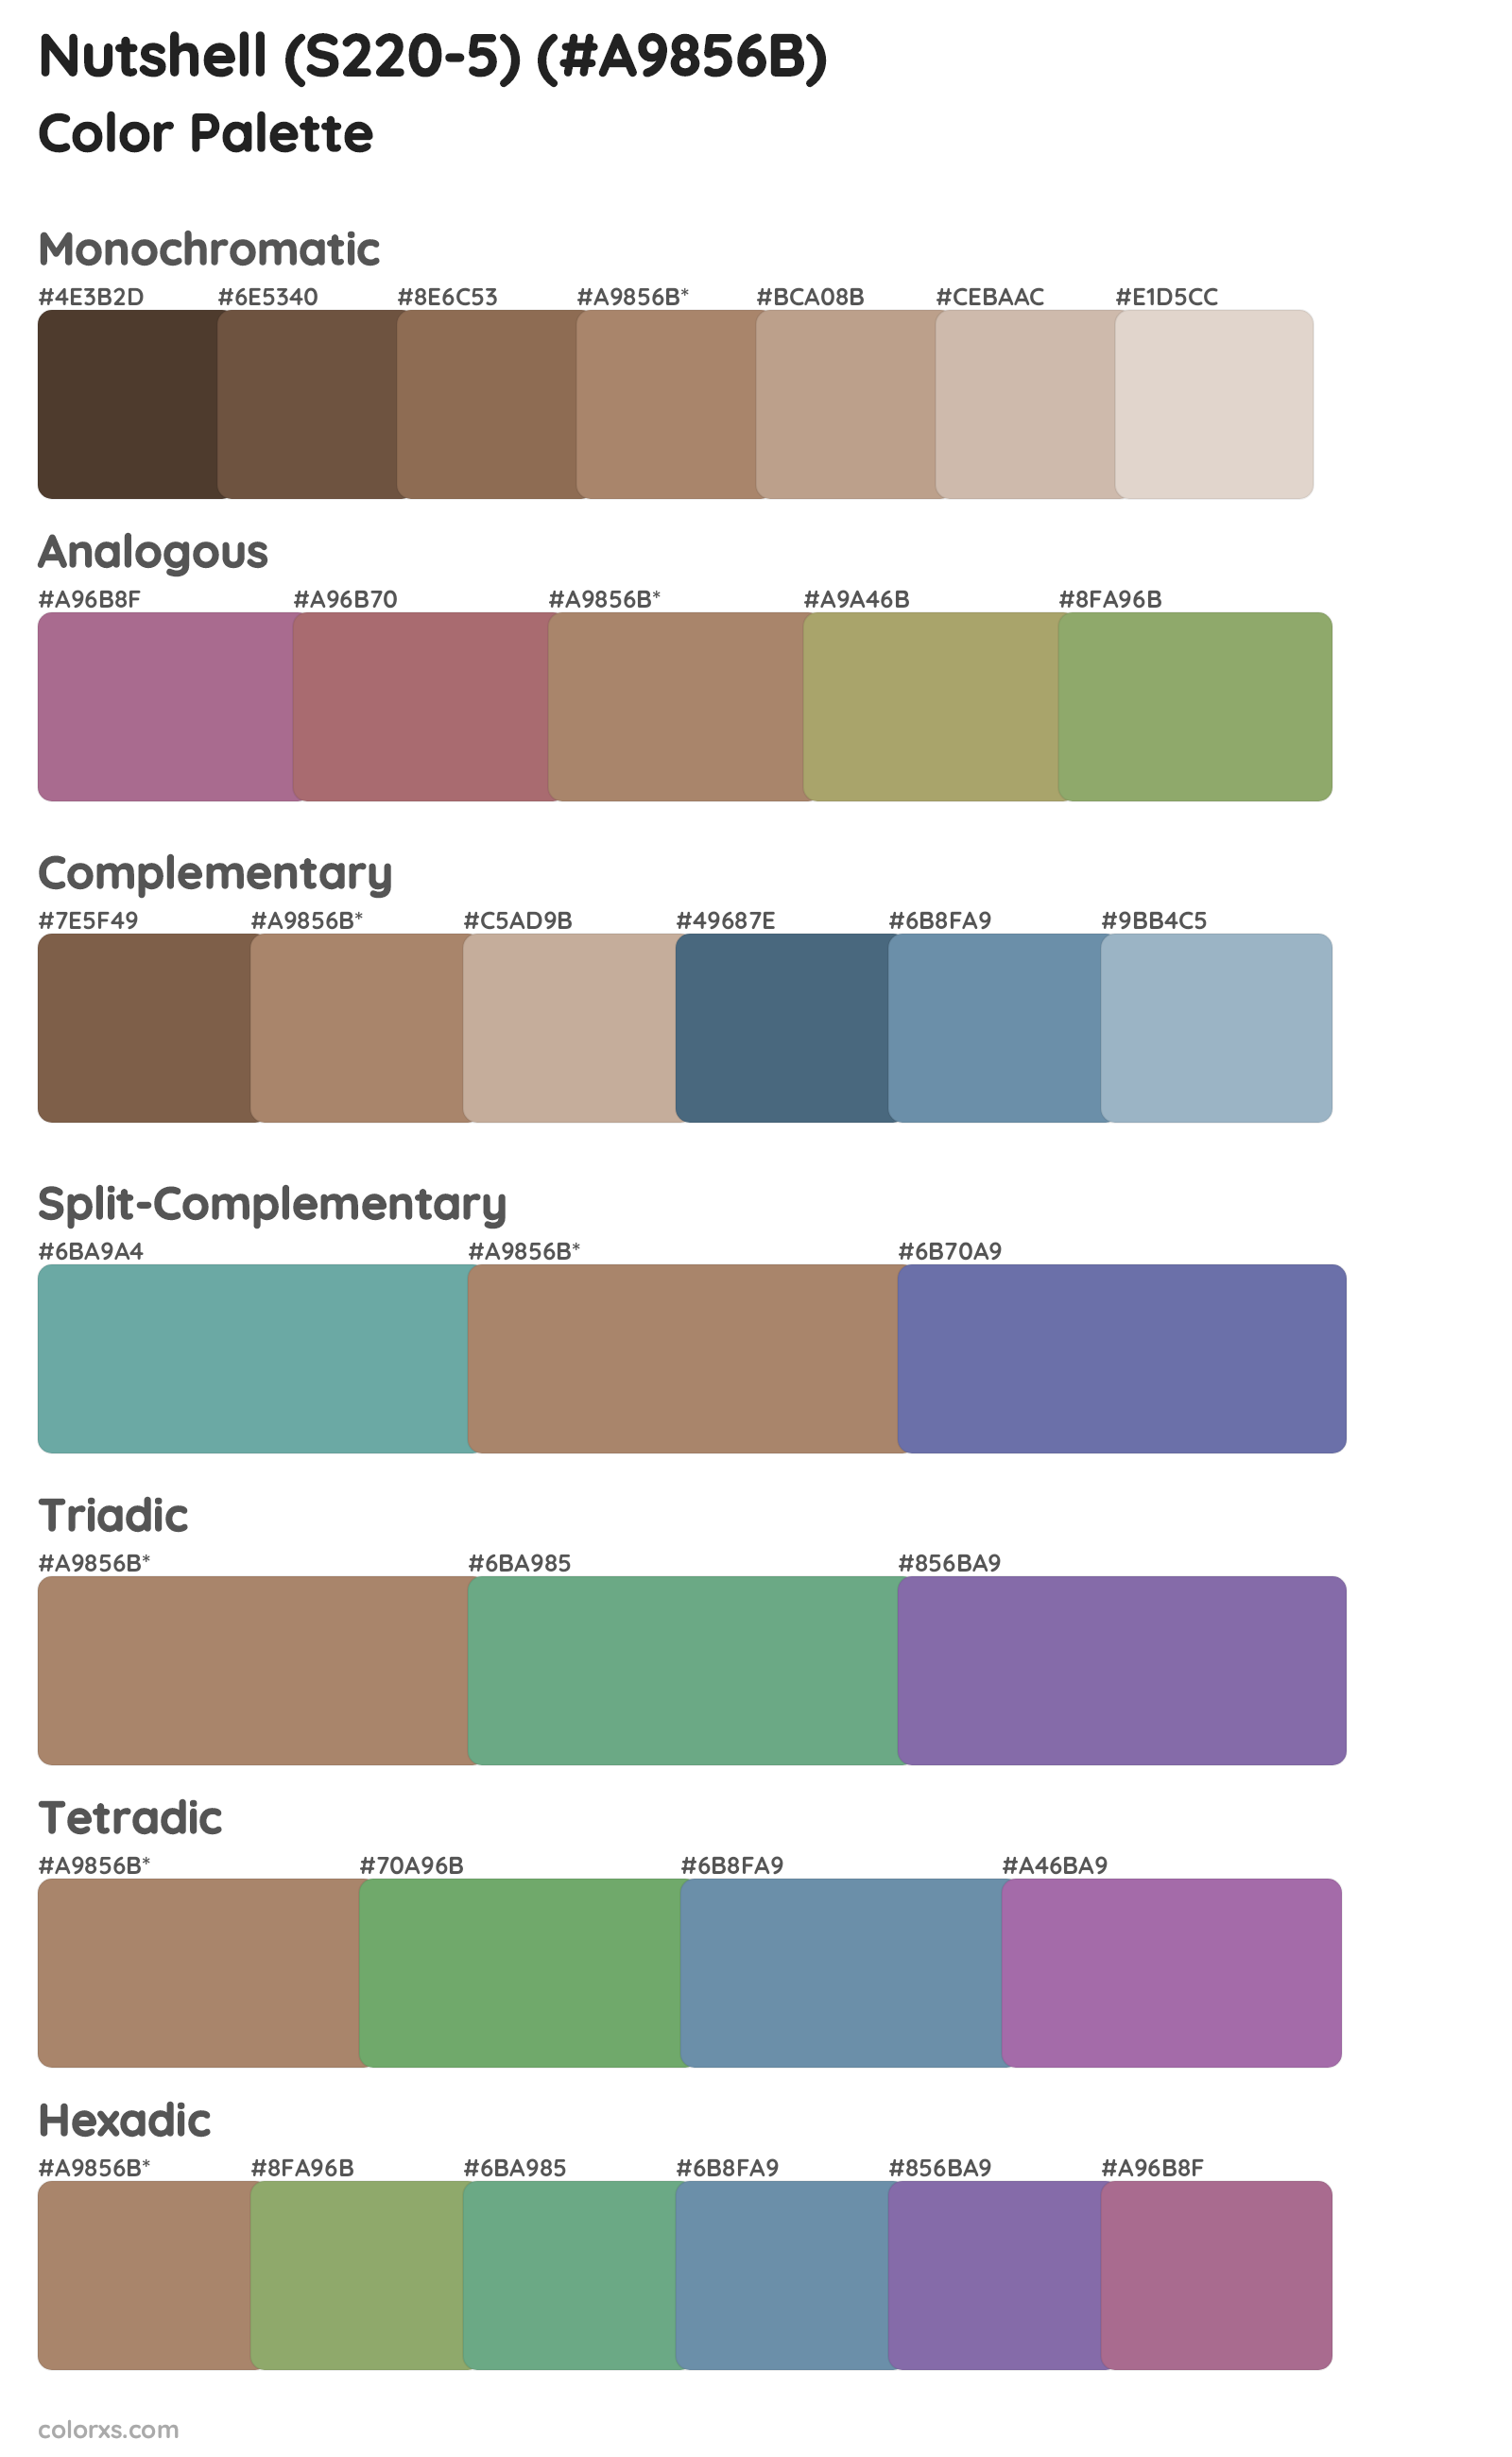 Nutshell (S220-5) Color Scheme Palettes